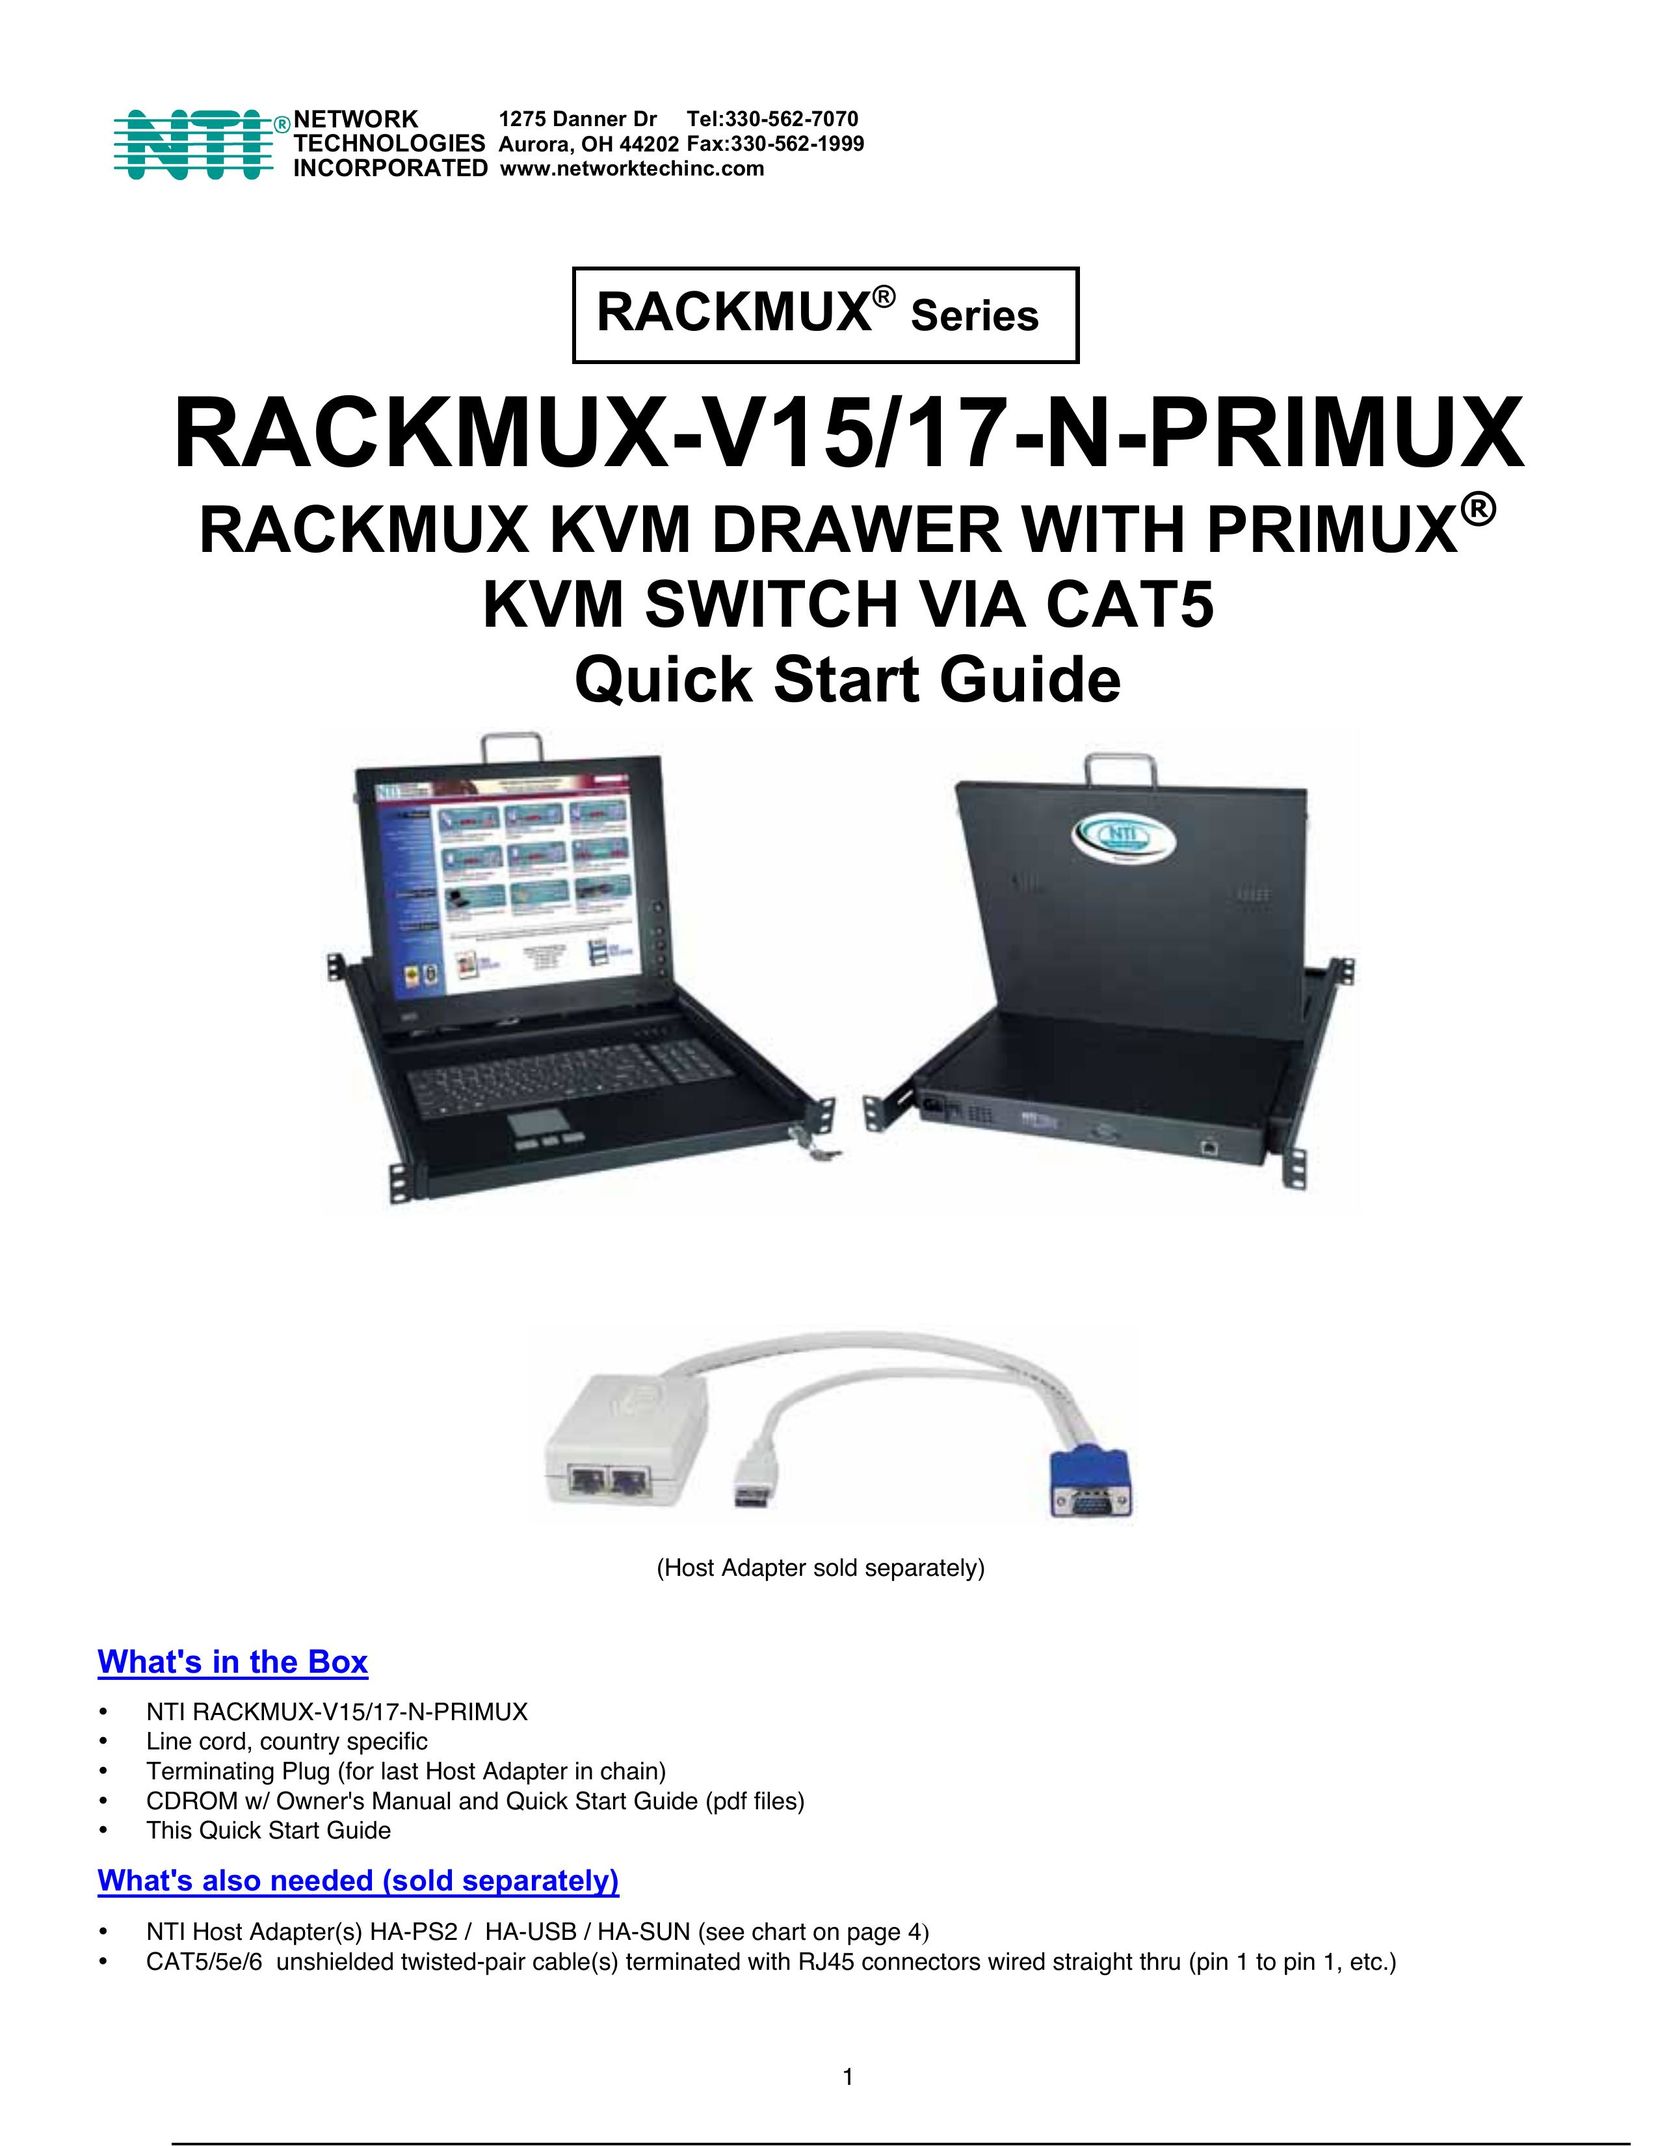 Network Technologies RACKMUX-V15 Switch User Manual